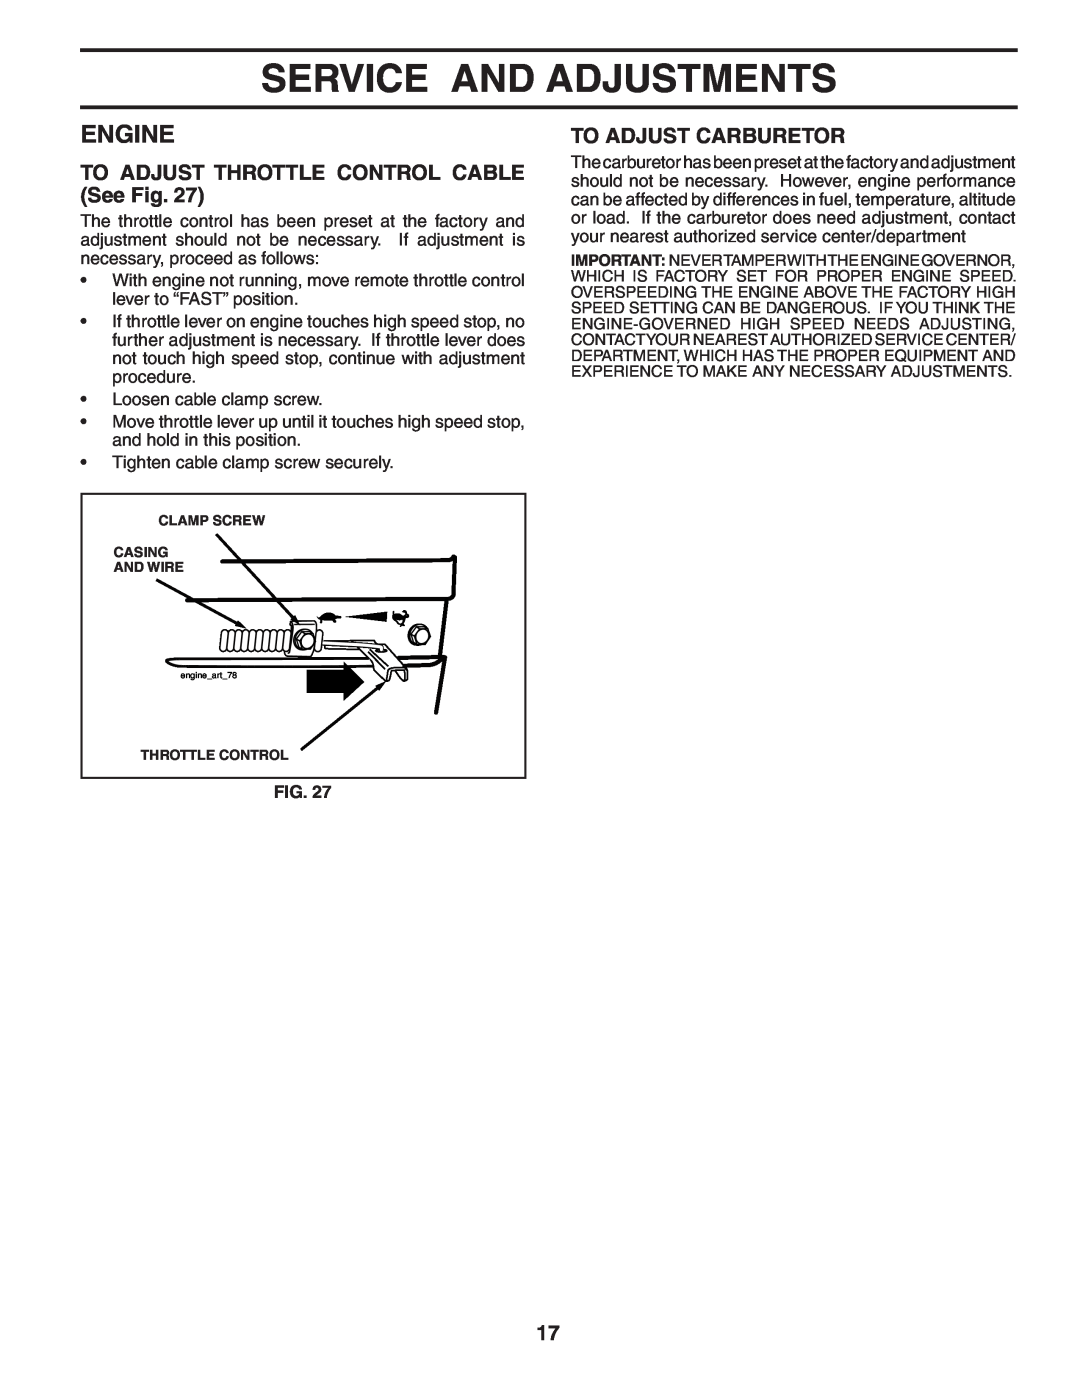 Poulan 401434 manual TO ADJUST THROTTLE CONTROL CABLE See Fig, To Adjust Carburetor, Service And Adjustments, Engine 